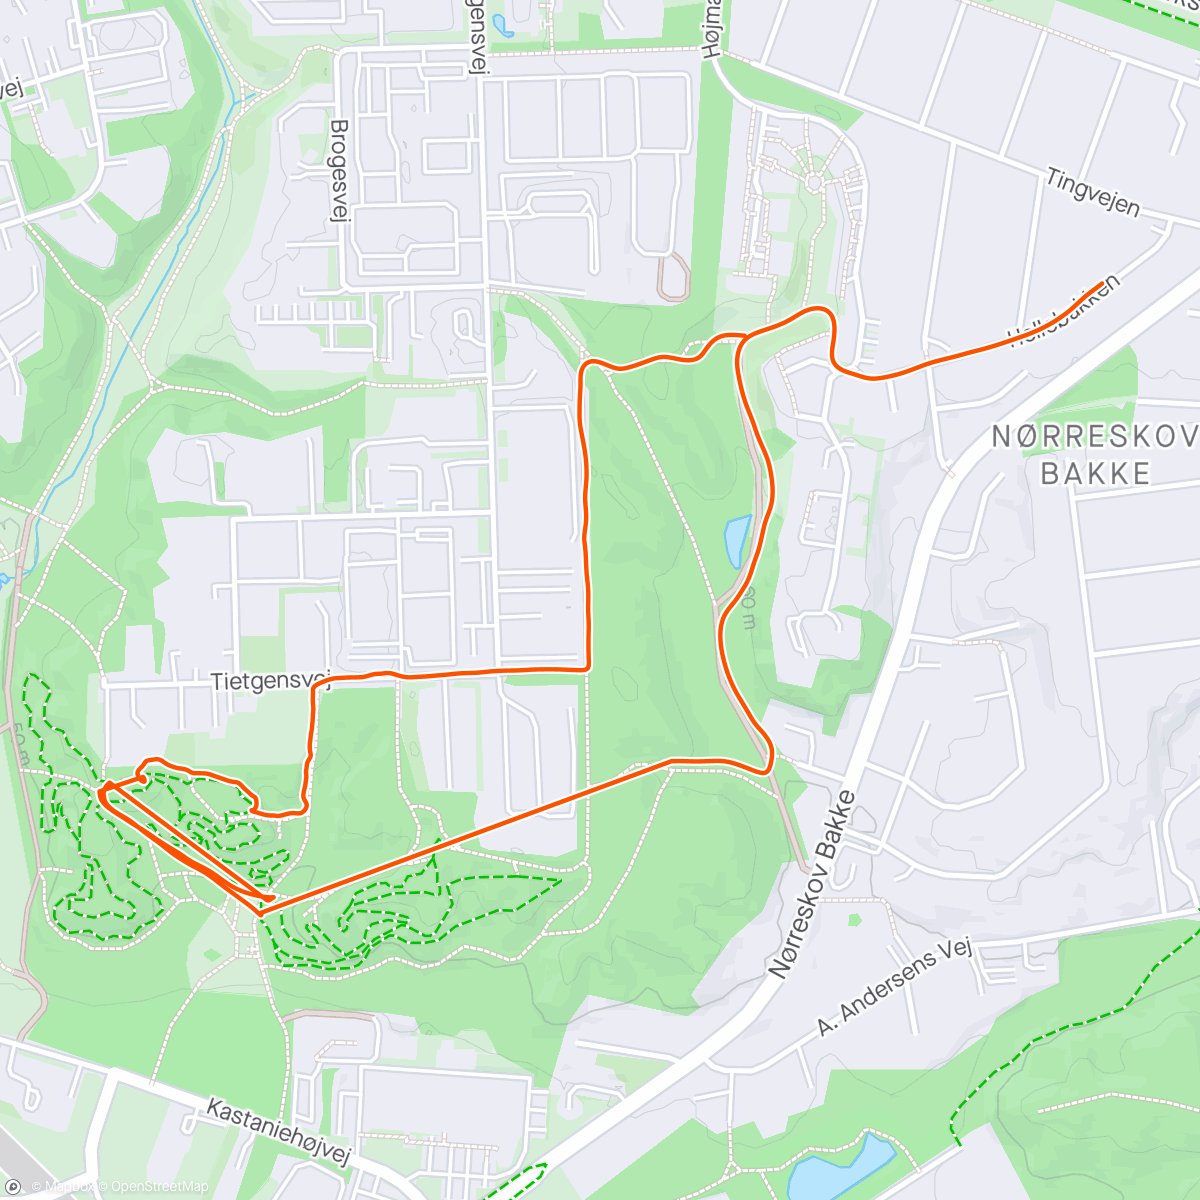 Mappa dell'attività Trail Hill sprints
1k@4:20
150m@3:35
200m@3:37
1k Treshhold@5:00